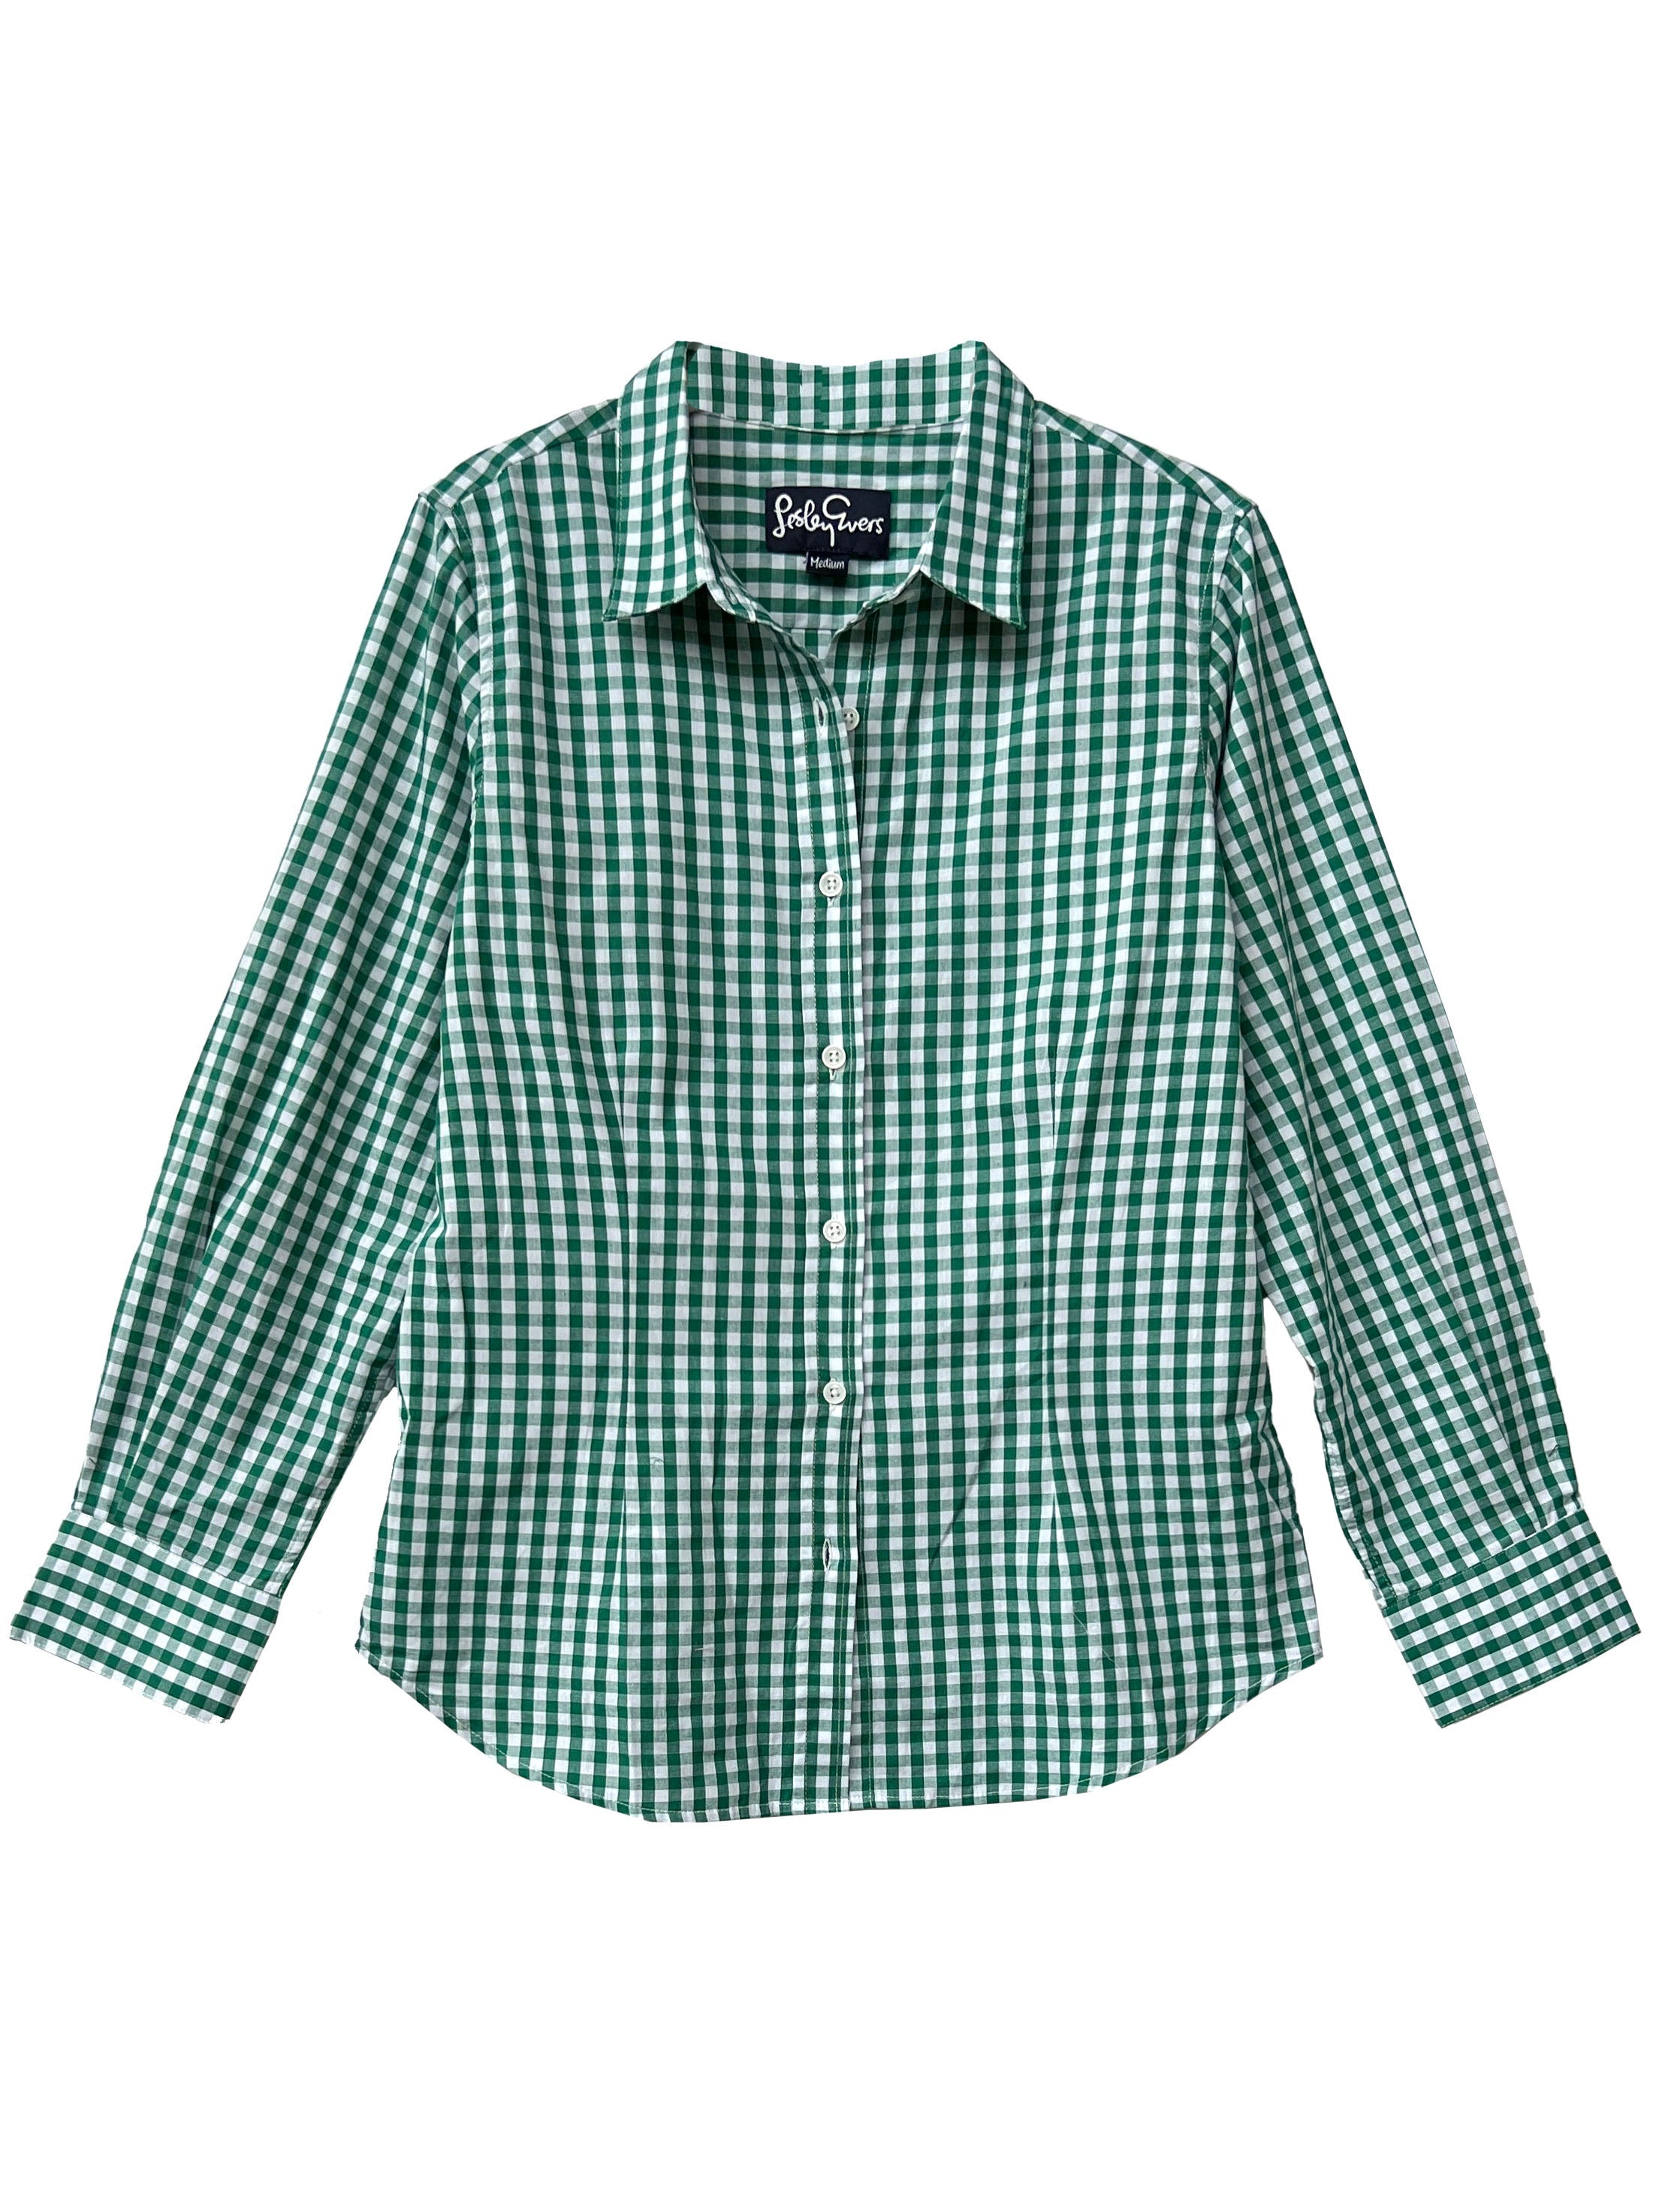 KATHRYN blouse Green Gingham - Lesley Evers-blouse-Green Gingham-kathryn